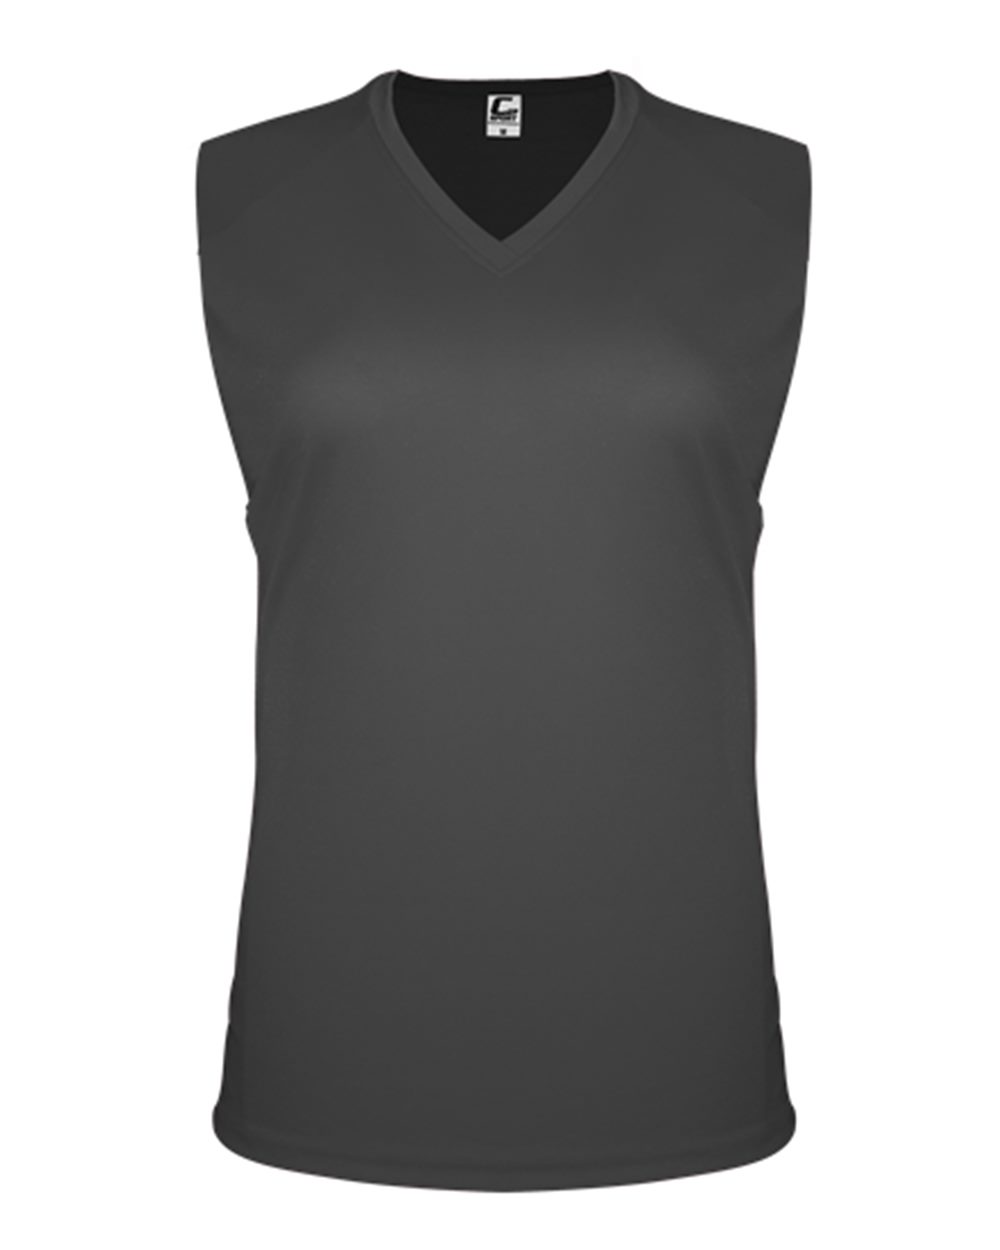 Women's Tops & T-Shirts, Vests & Tees